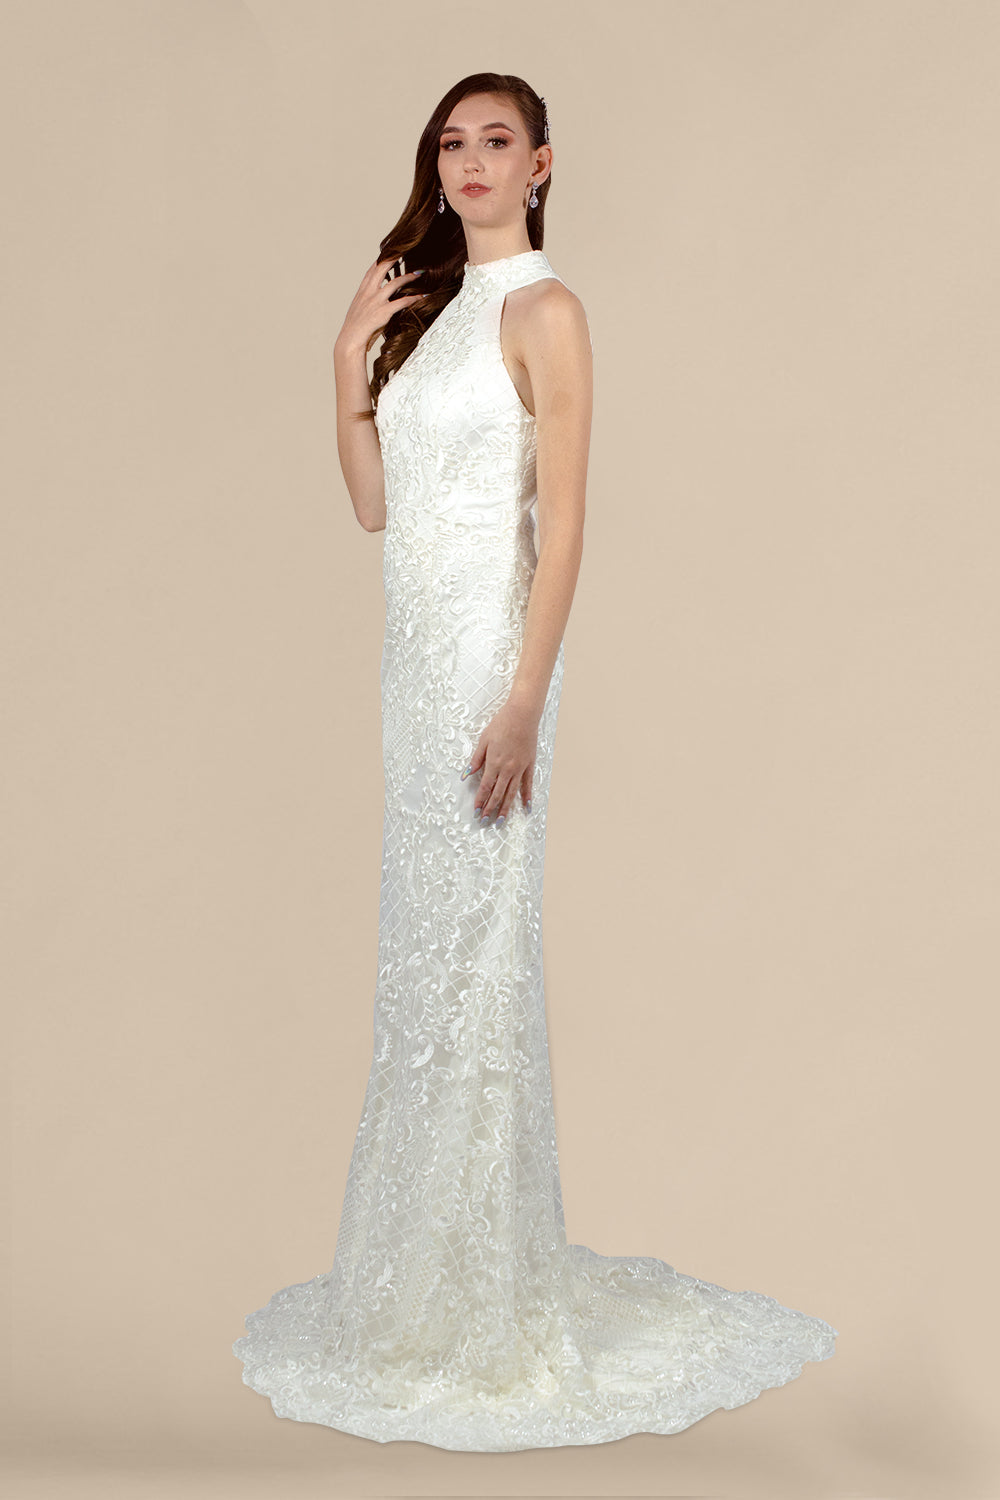 custom made lace wedding gowns dressmaker designer perth australia envious bridal & formal